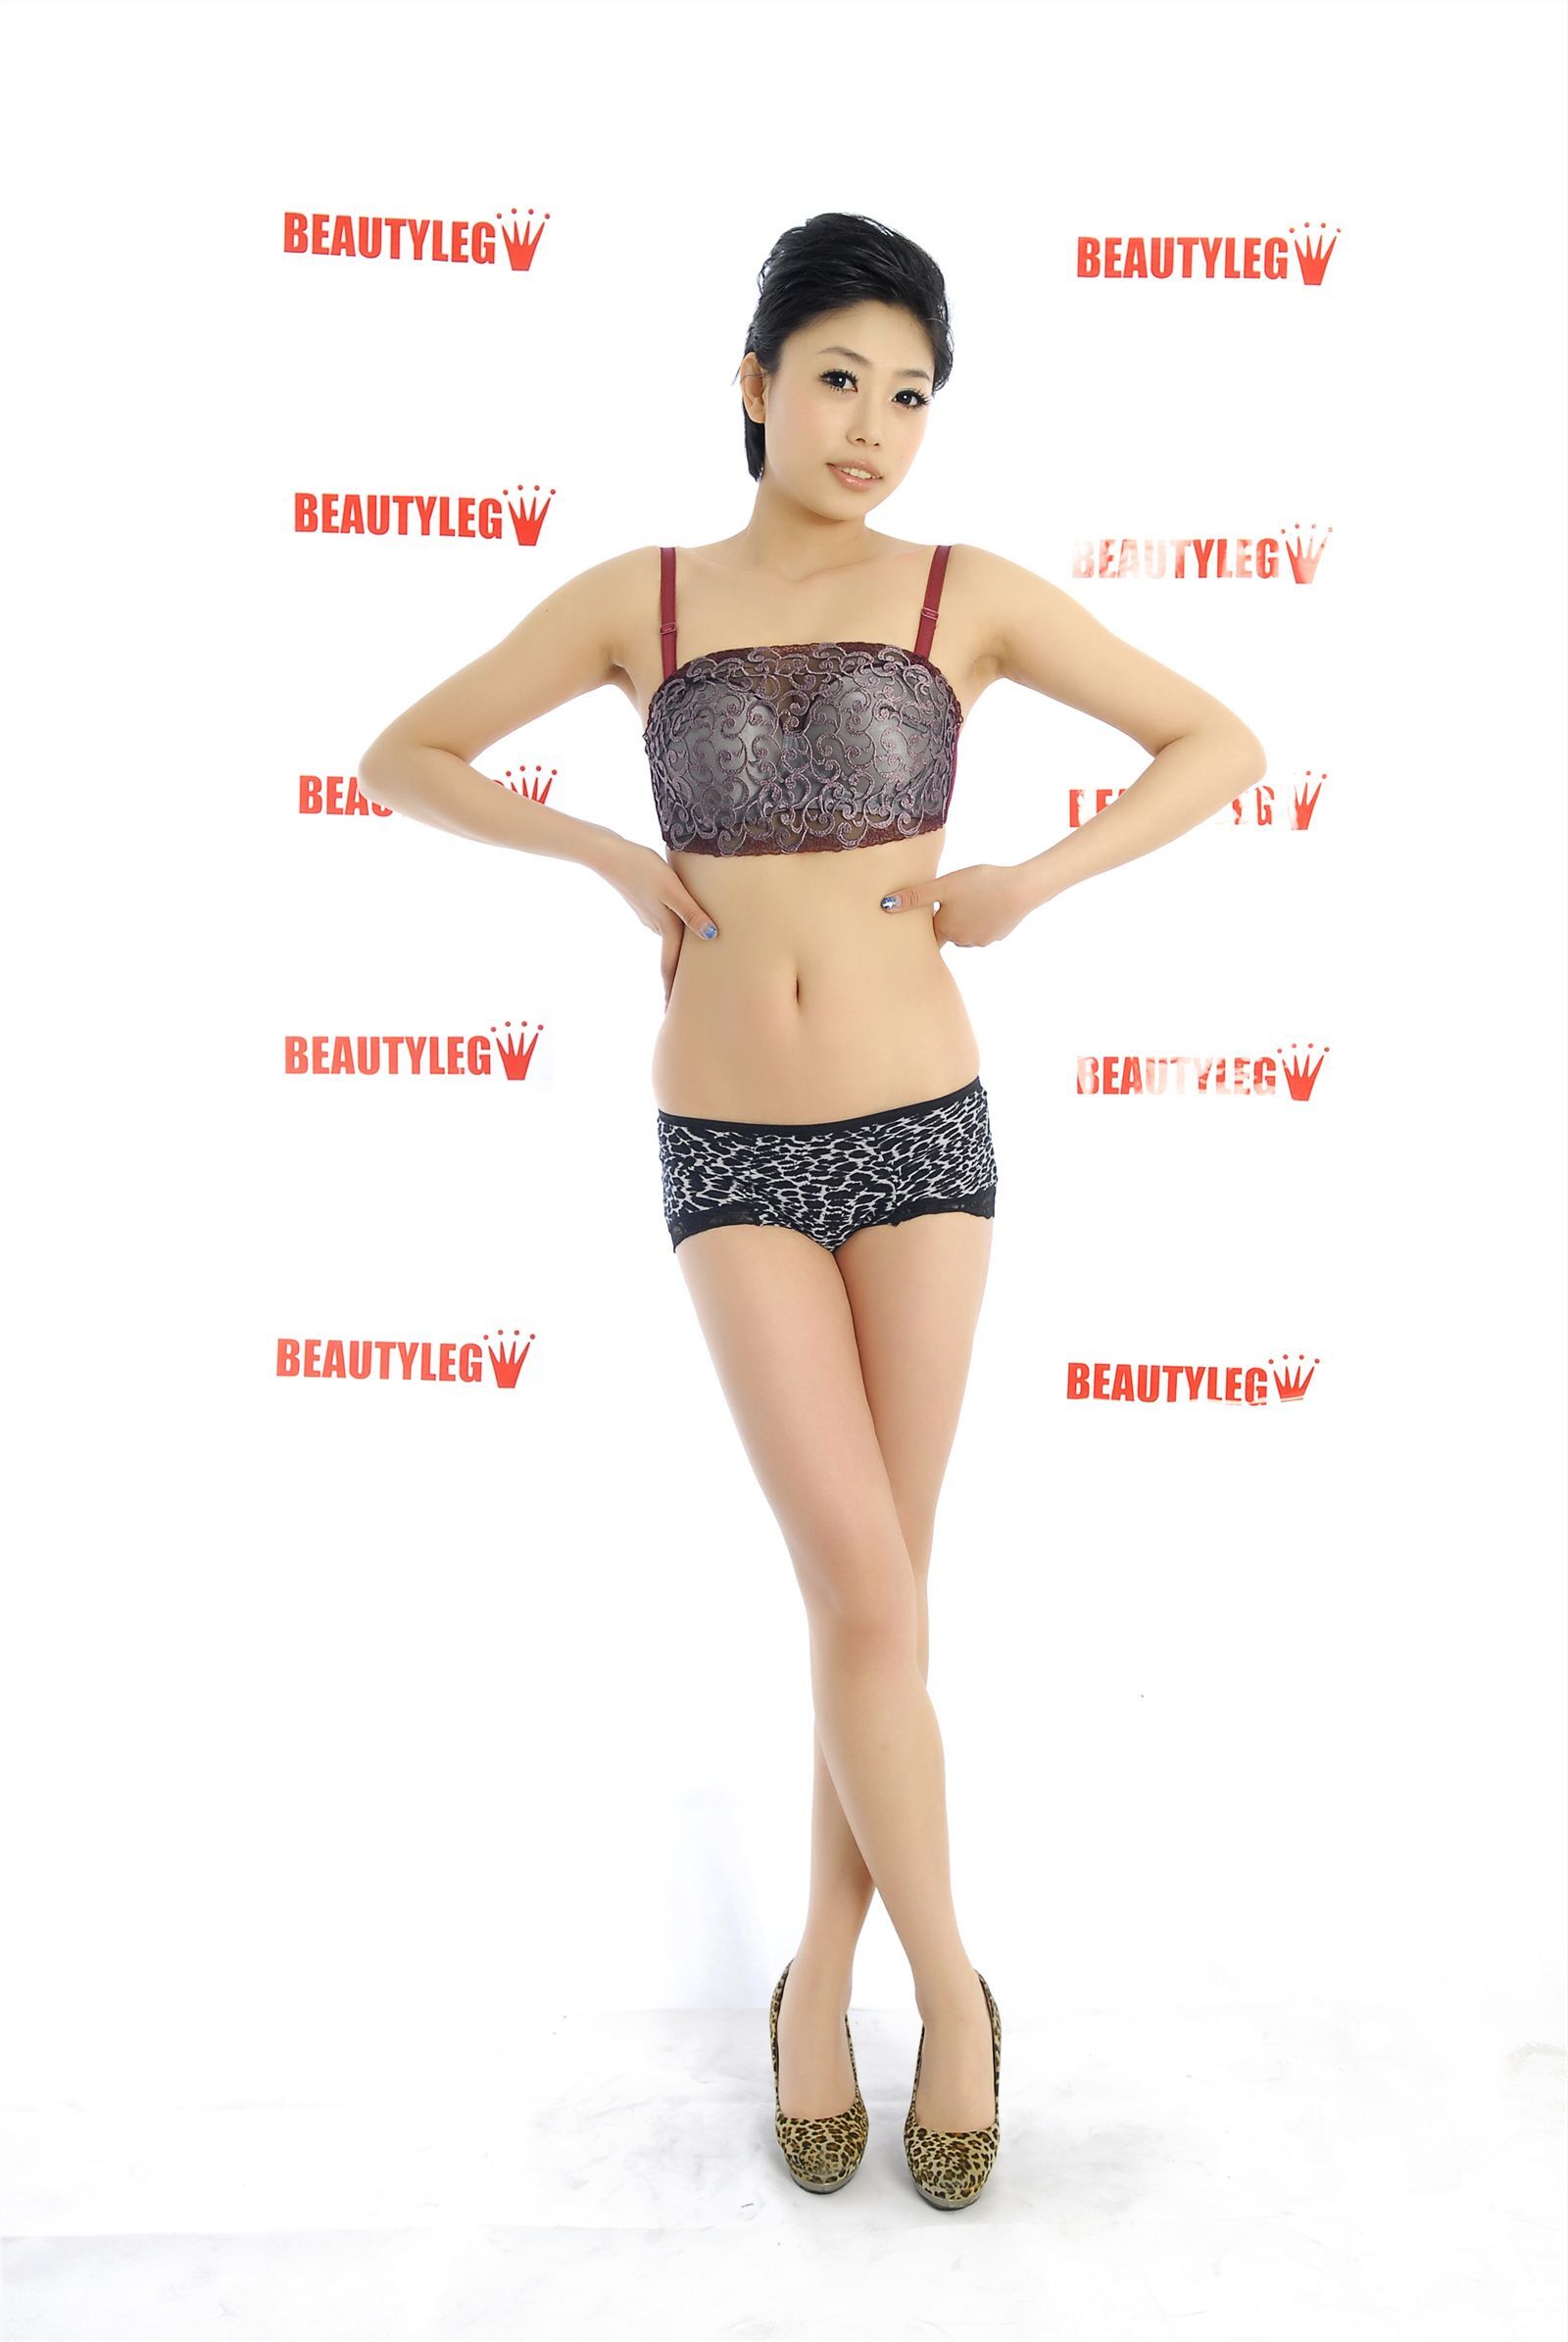 BeautyLeg underwear photo model set (3) high definition model underwear photos